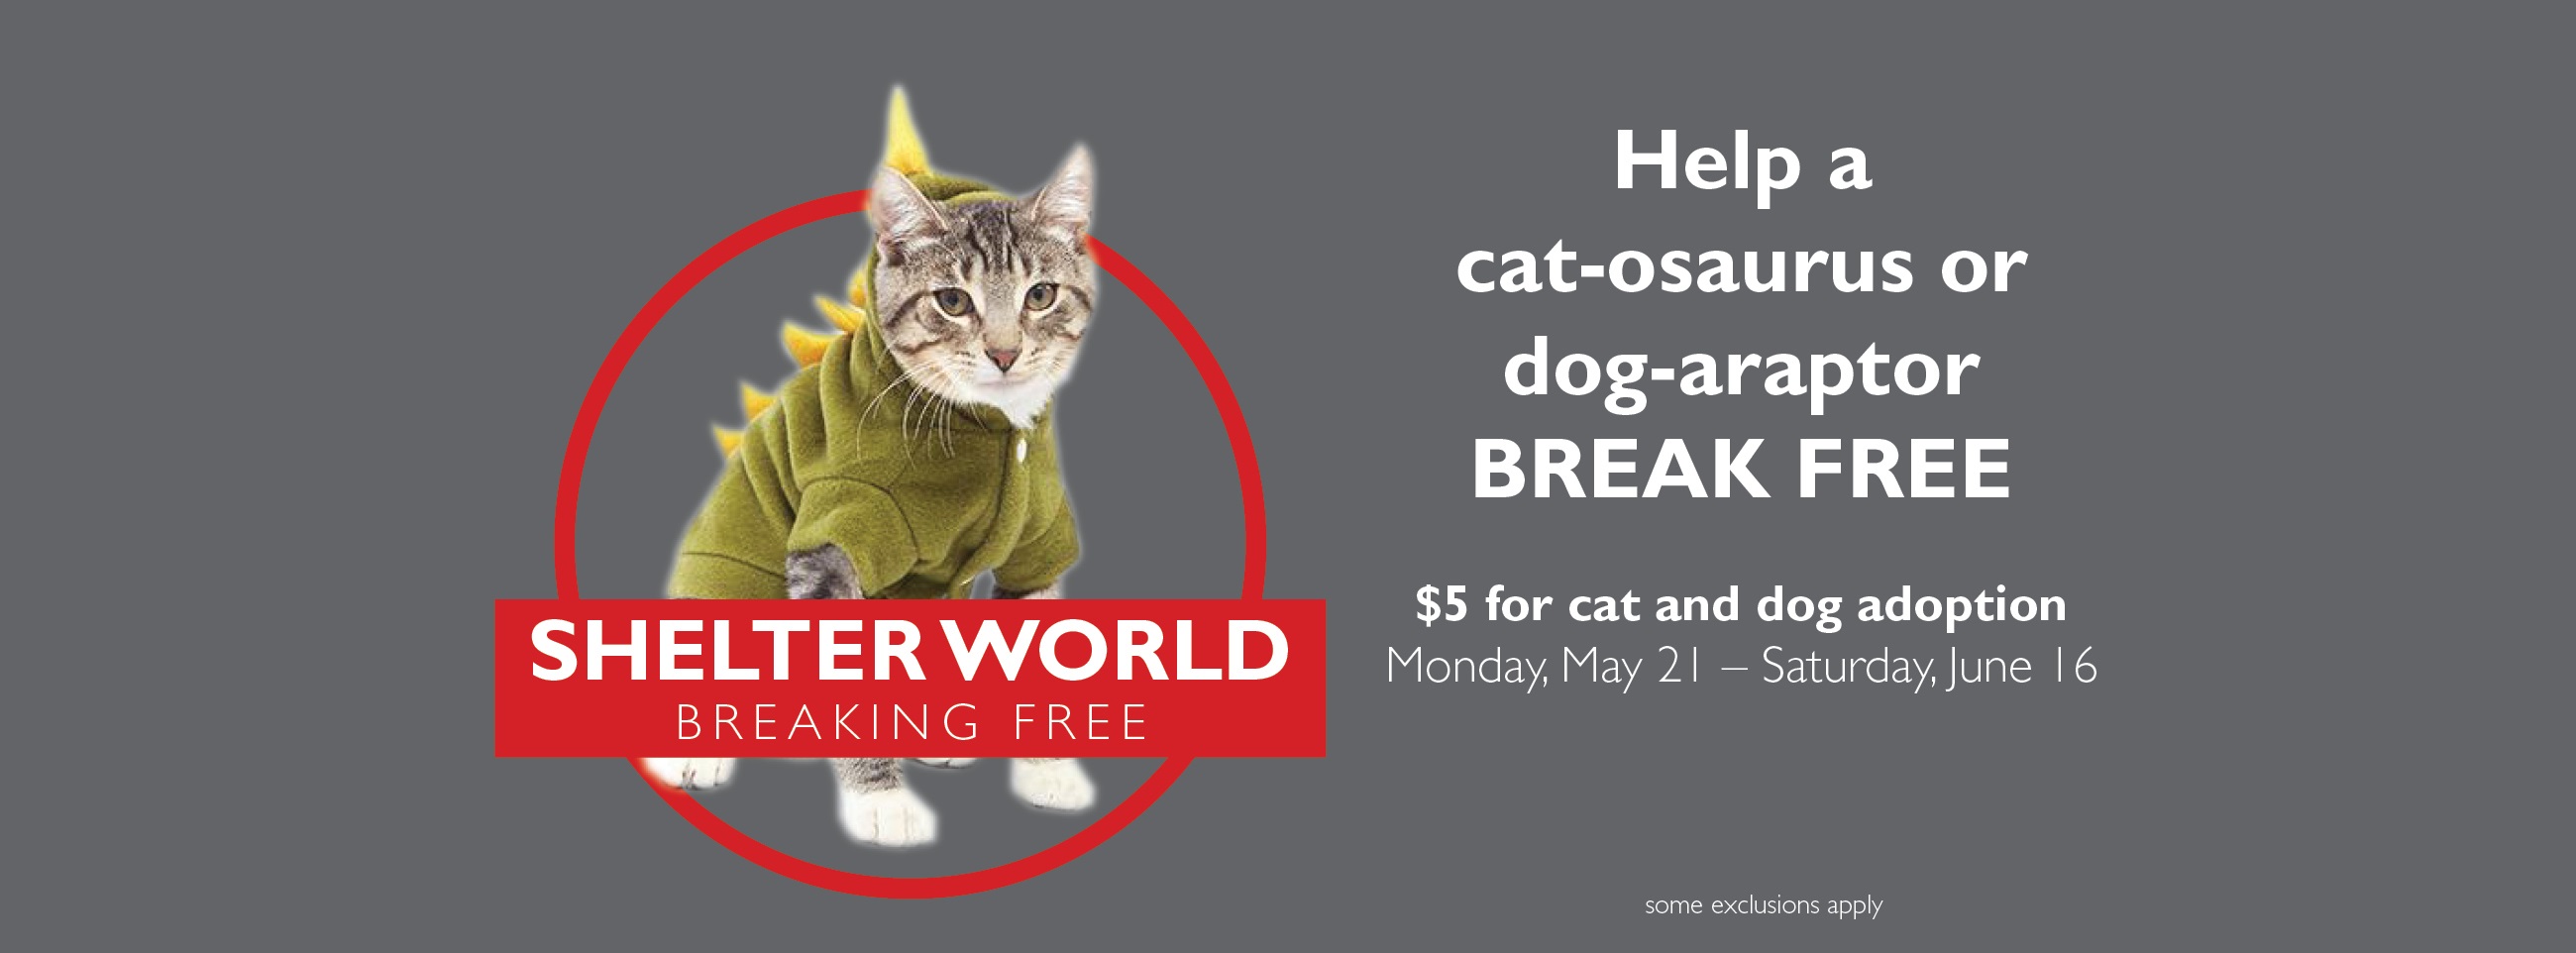 Shelter World Breaking Free Cat.osaurus 2018